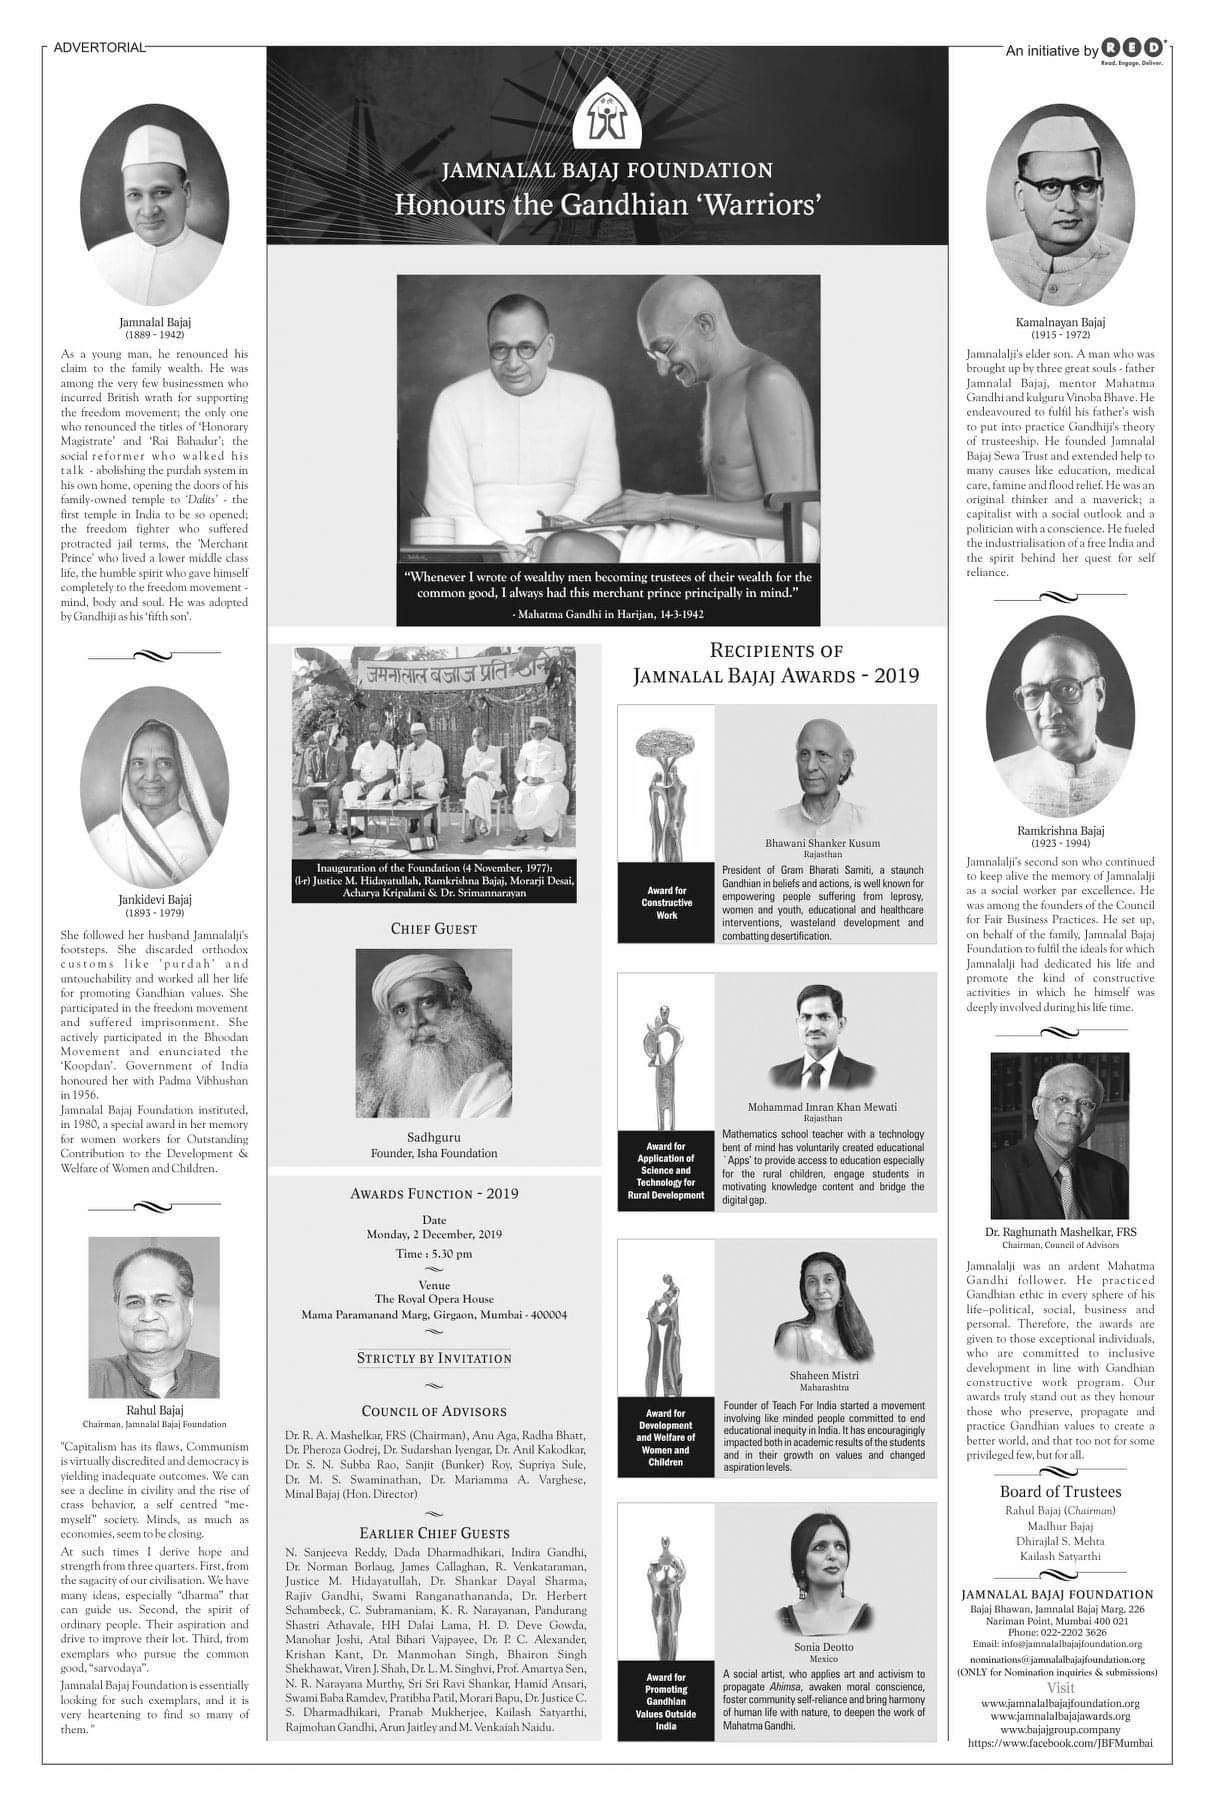 ﻿Mr. Bhawani Shanker Kusum (President, Gram Bharati Samiti, Rajasthan) received the Jamnalal Bajaj Award for Constructive Work (2019) at the Jamnalal Bajaj Awards 2019, held on 2nd December, 2019 at 5:30 pm at The Royal Opera House, in Mumbai.